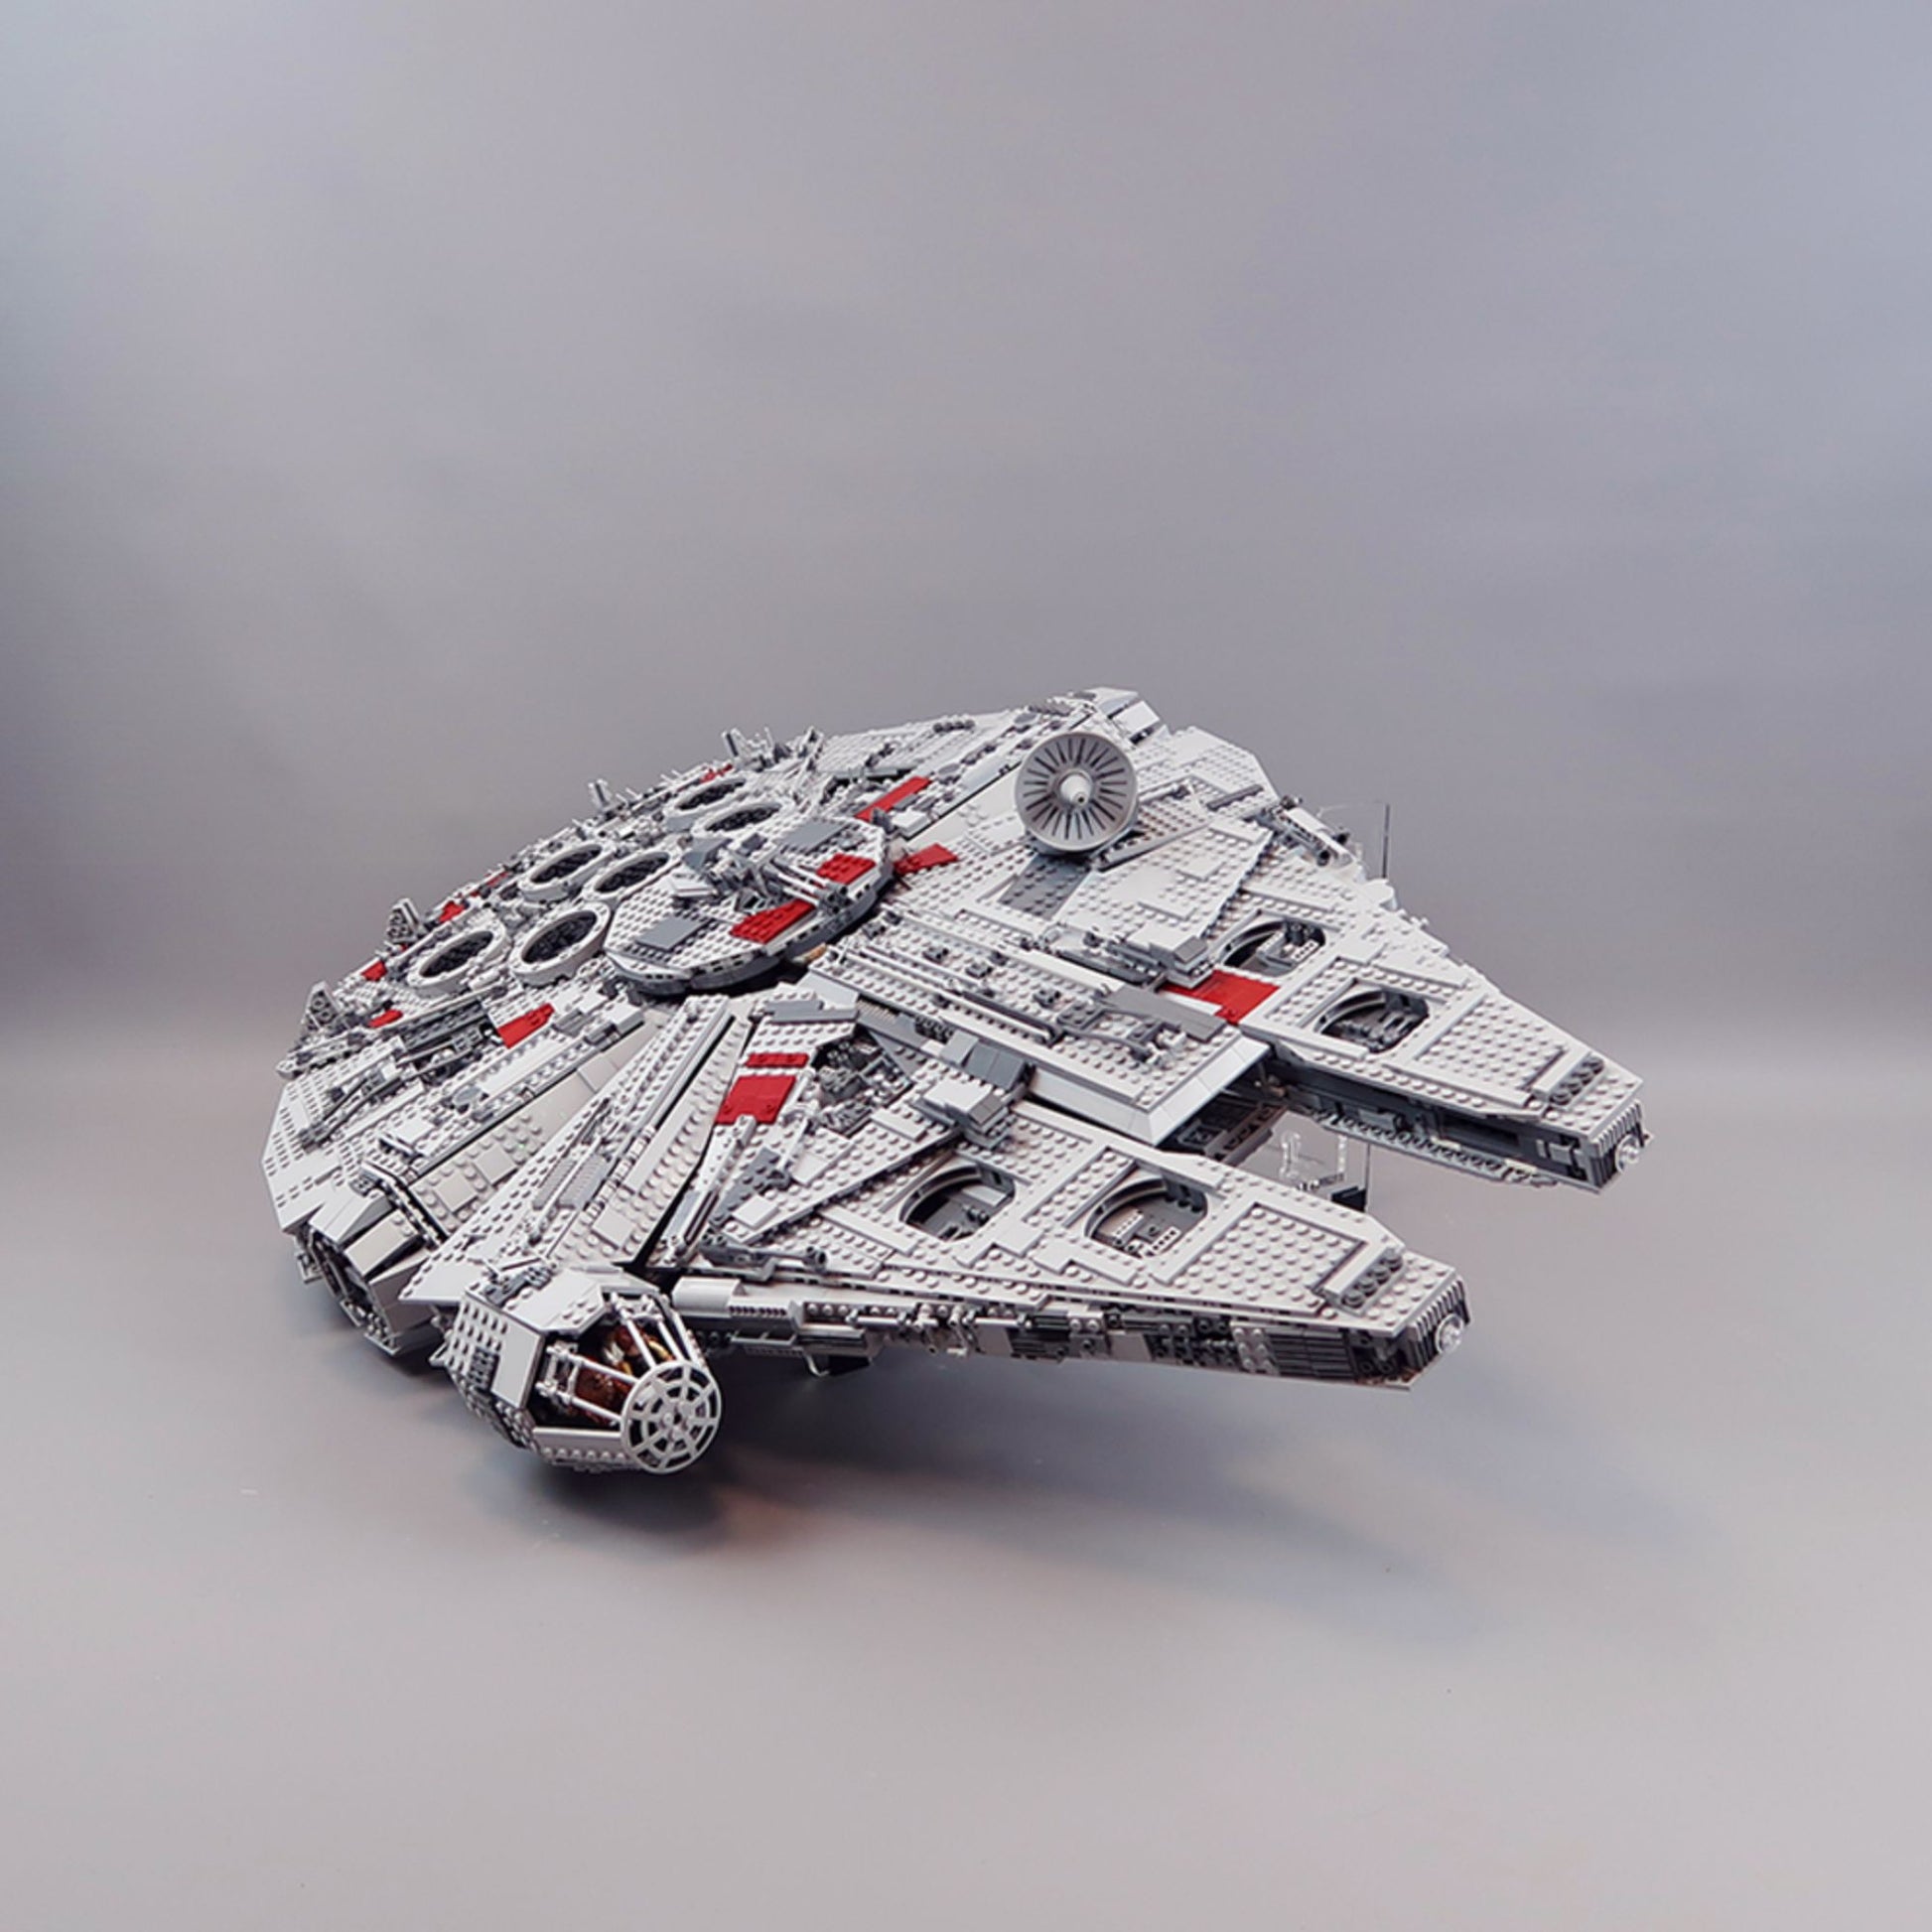 2-inch 1 LEGO Star Wars Millennium Falcon Stand Kit 75105/75257£CP2633